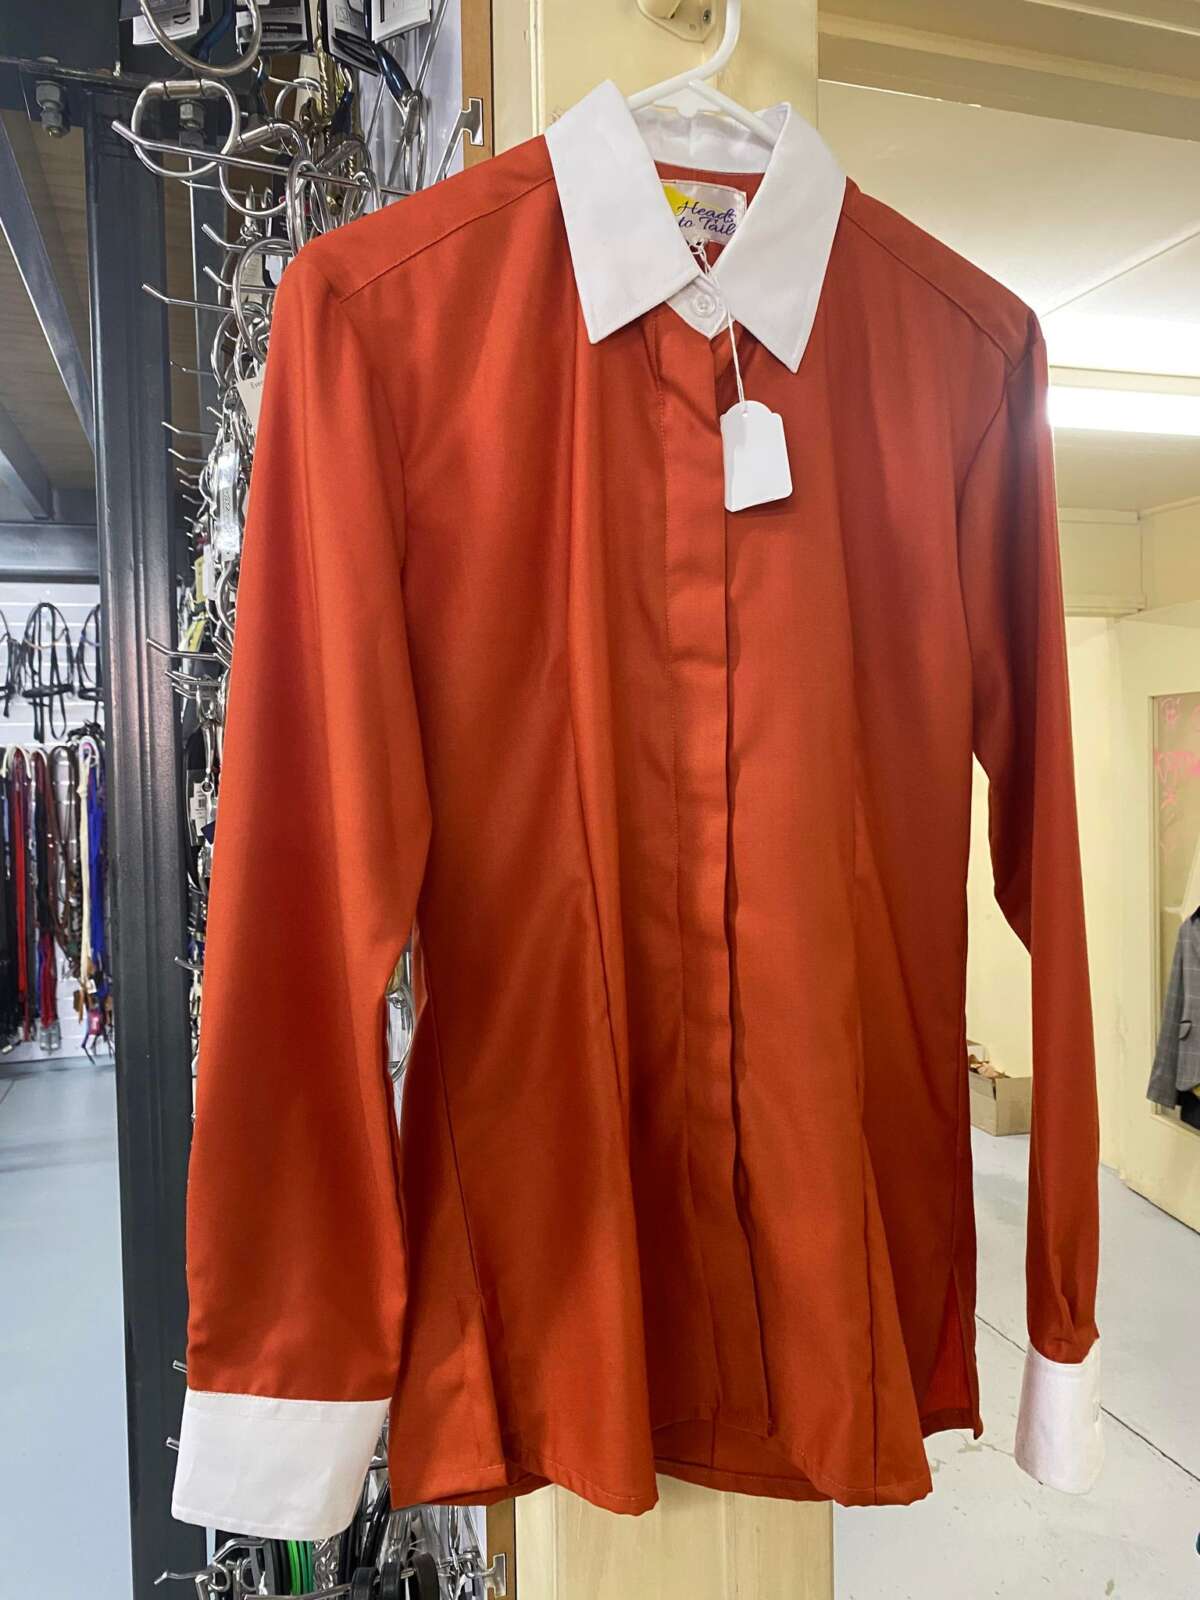 Ladies Orange Collared Show Shirt – Size 10